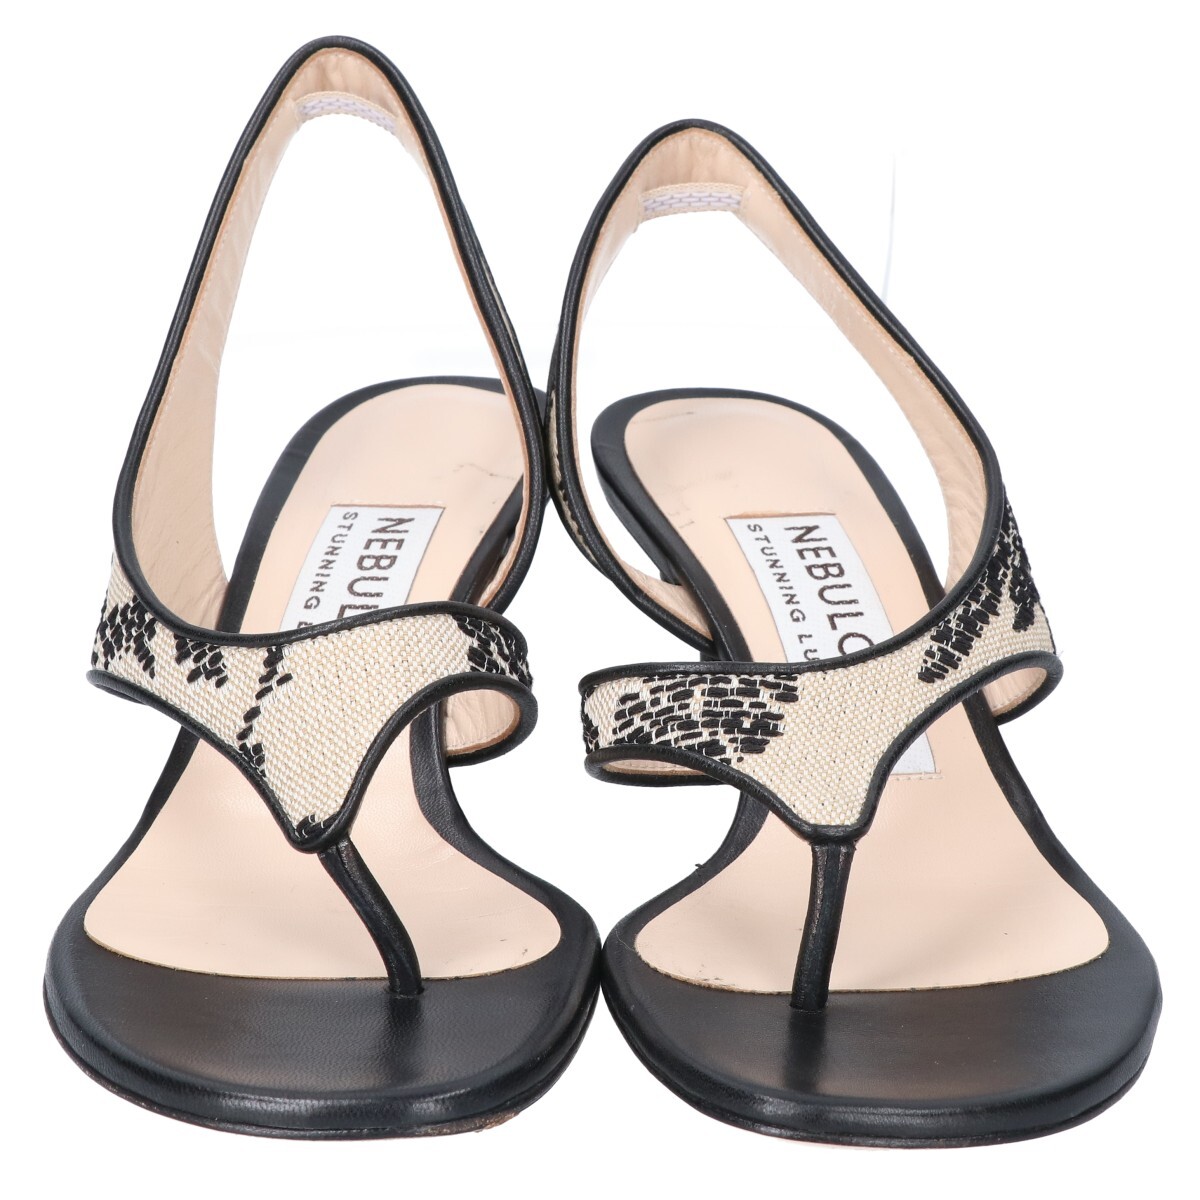  beautiful goods stunning lure Stunning Lure x NEBULONI E.ne blow ni20 anniversary commemoration tongs sandals shoes 35 1/2 NATURAL JUNGLE